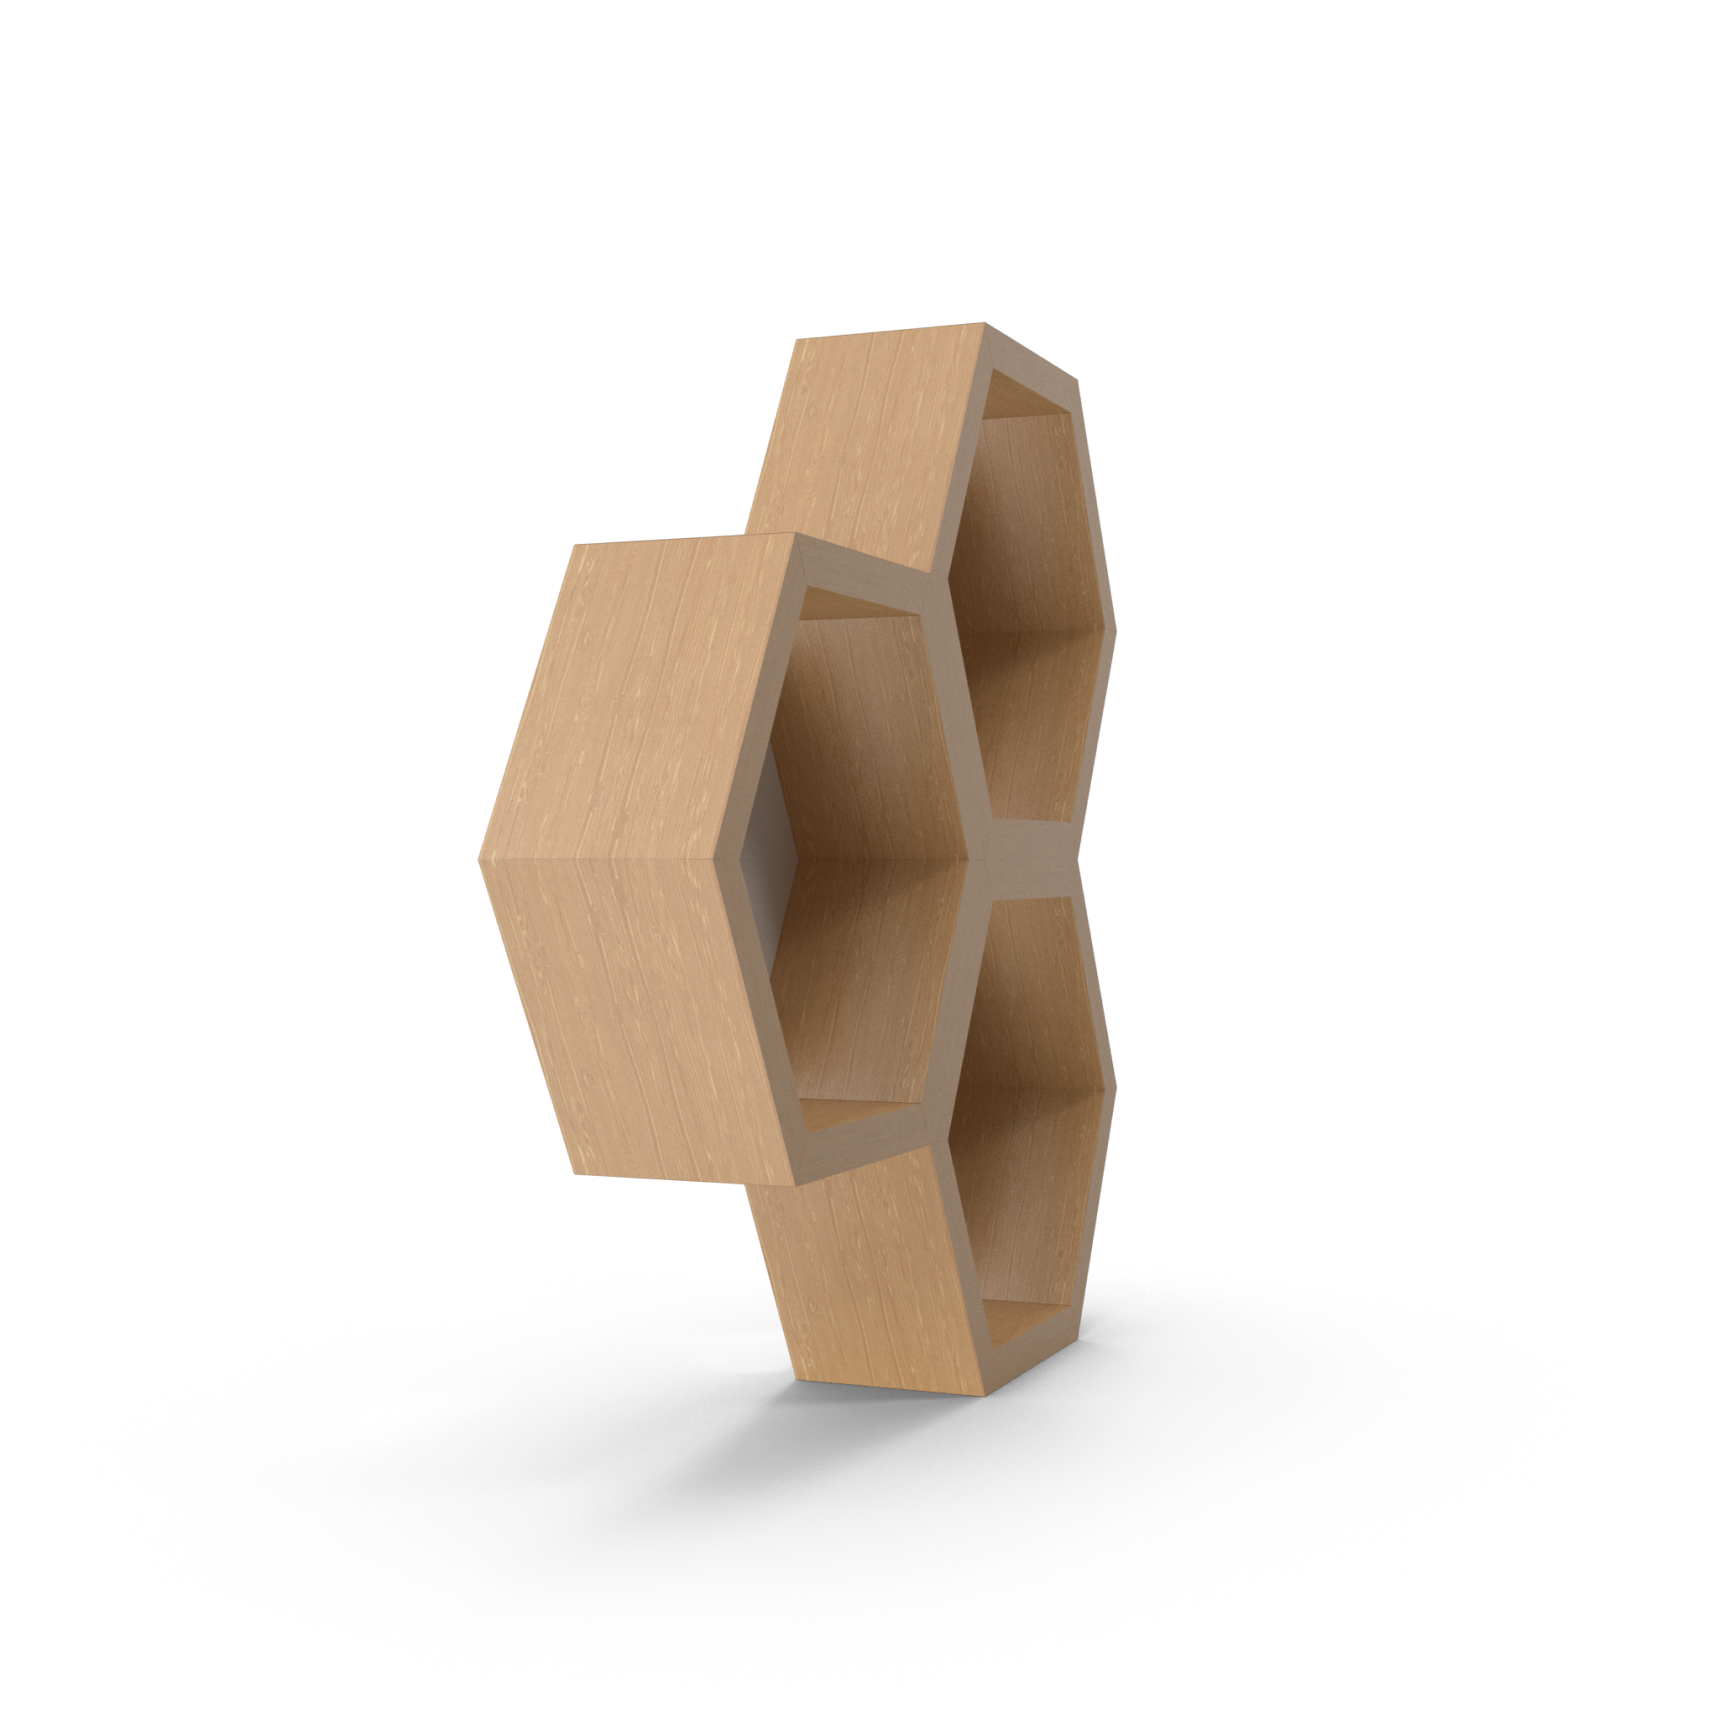 Wall tri-hexagonal shelve